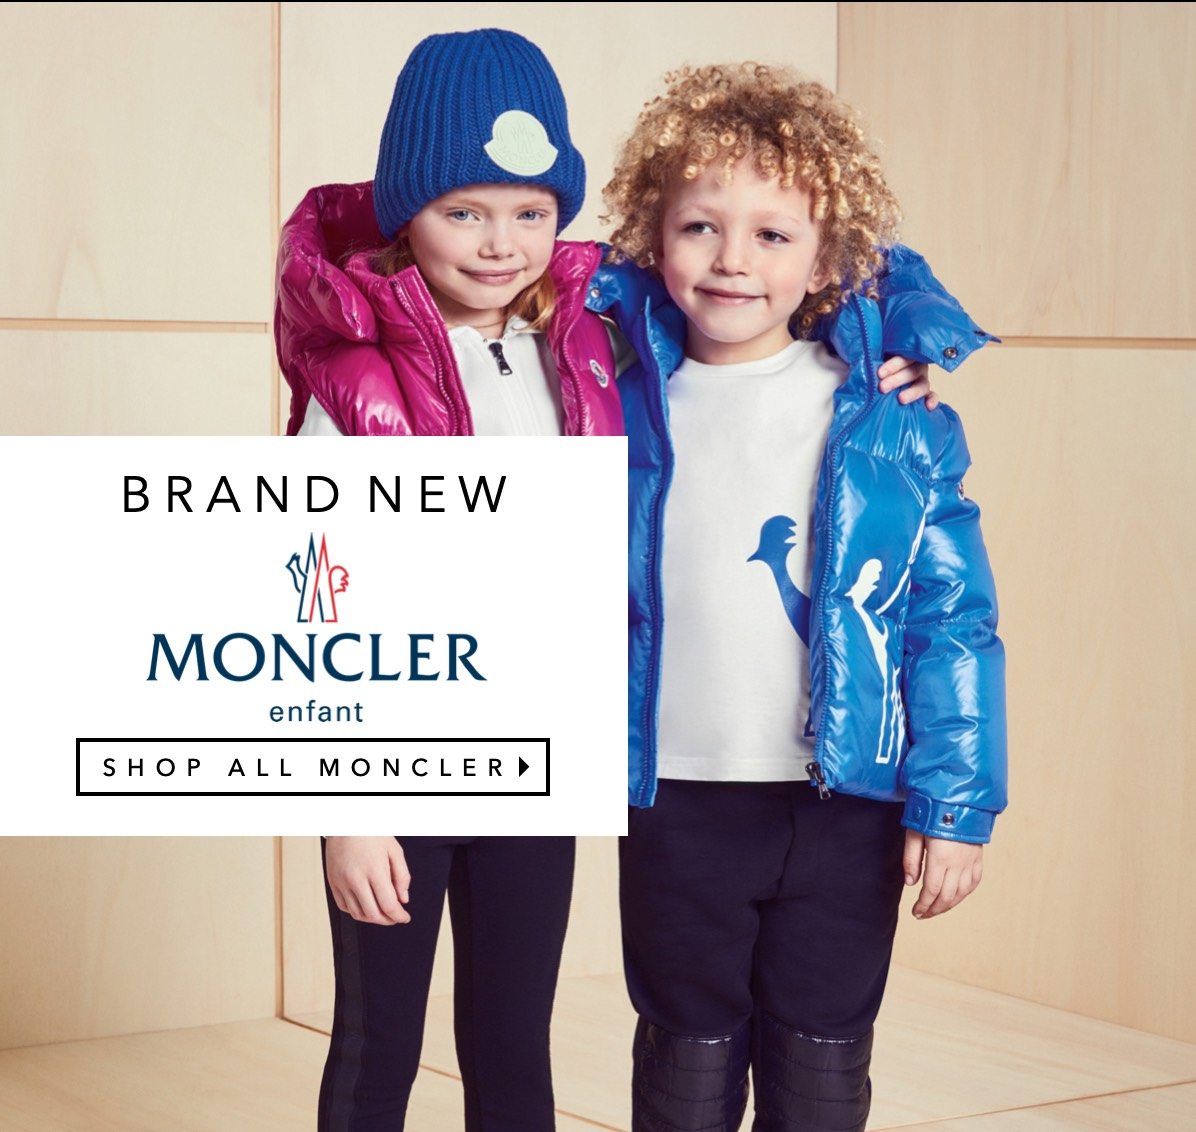 childsplay clothing moncler